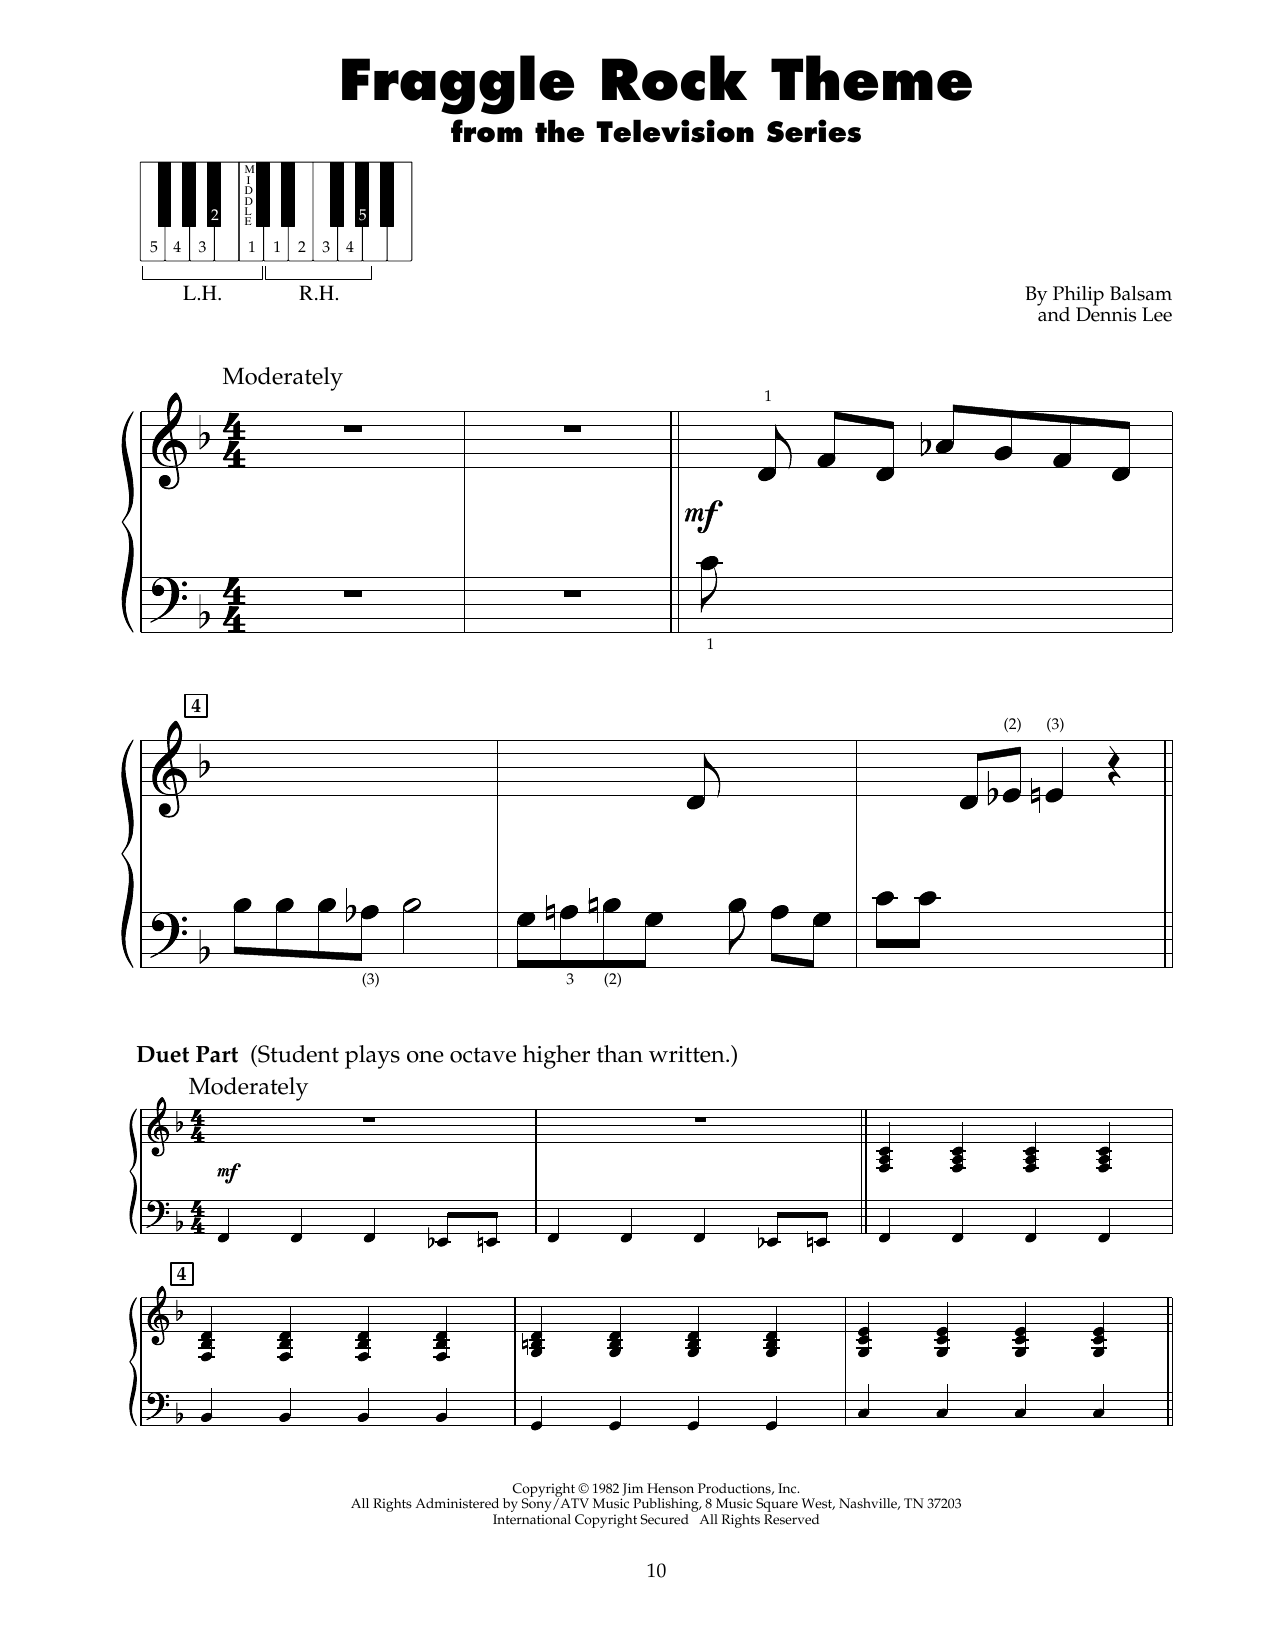 Download Philip Balsam Fraggle Rock Theme Sheet Music